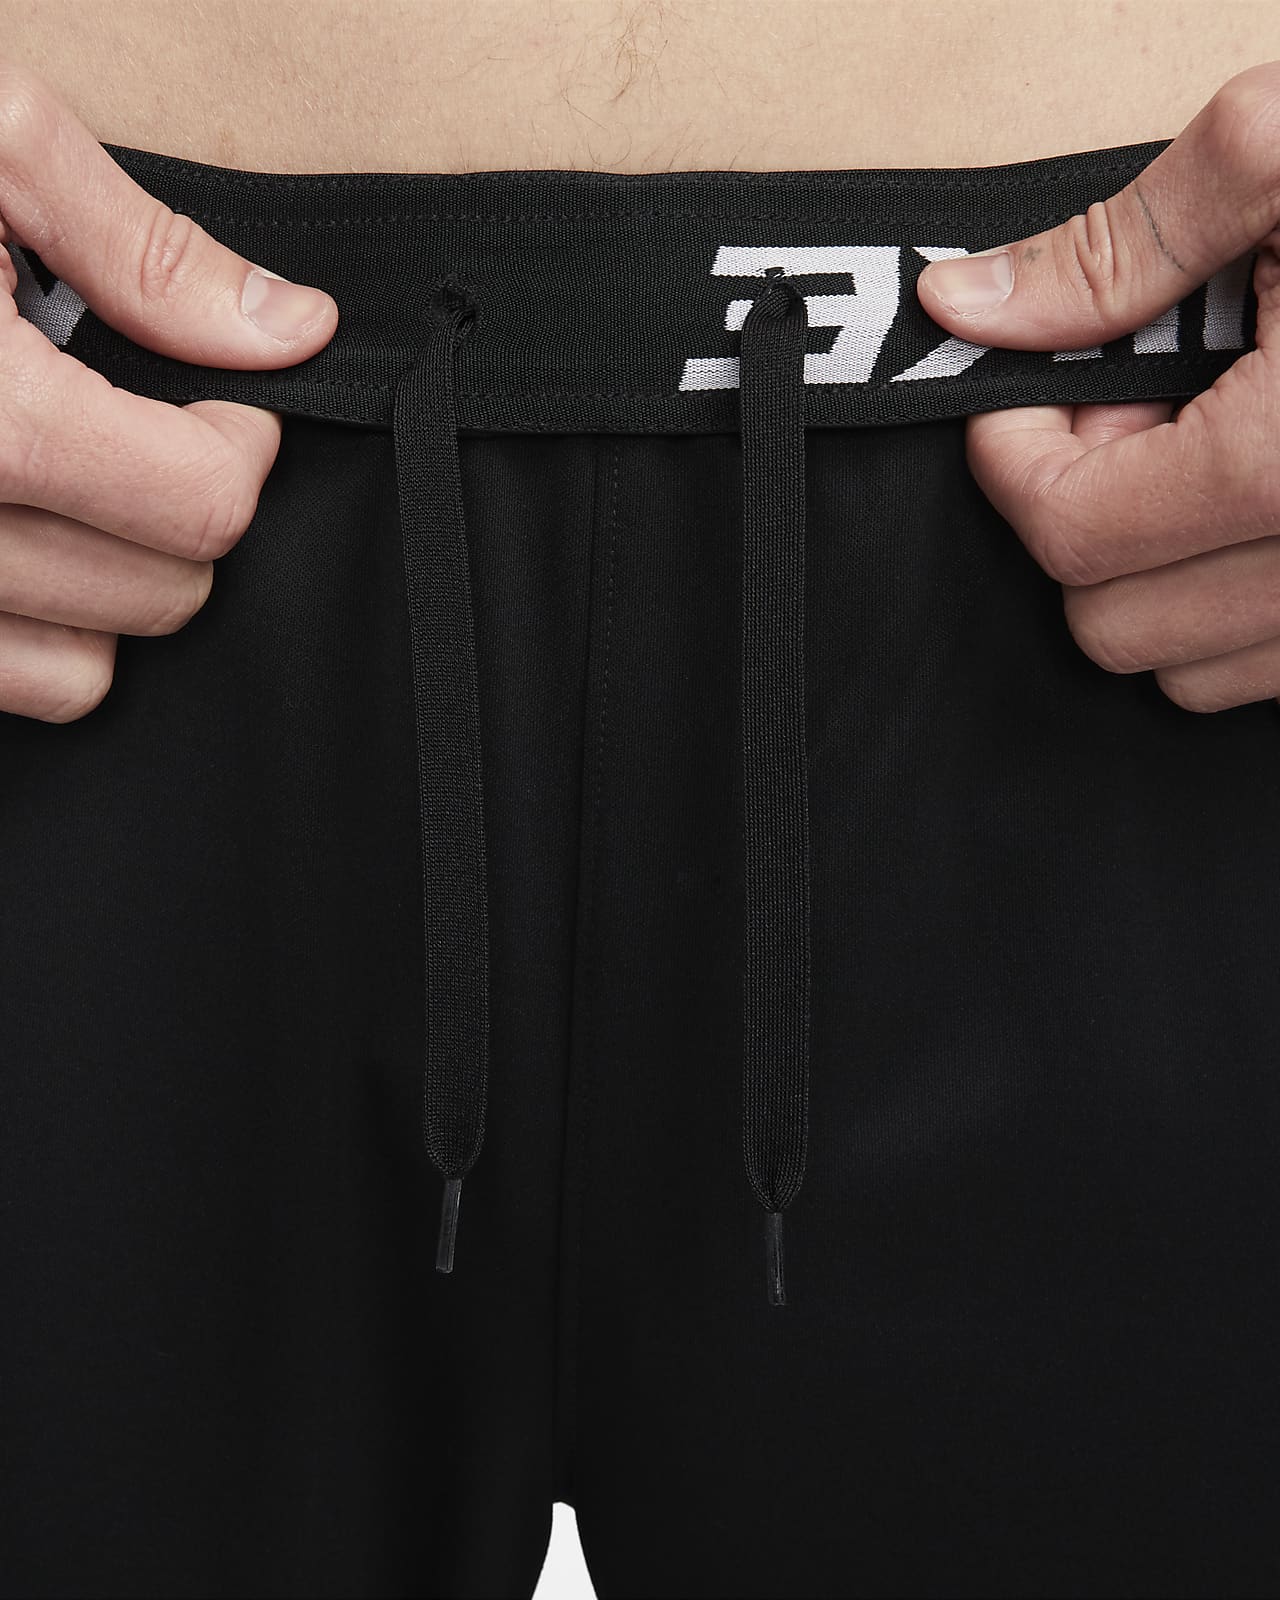 Nike Essntl Flc Mr Pnt Tight W BV4099-113 pants – Your Sports Performance